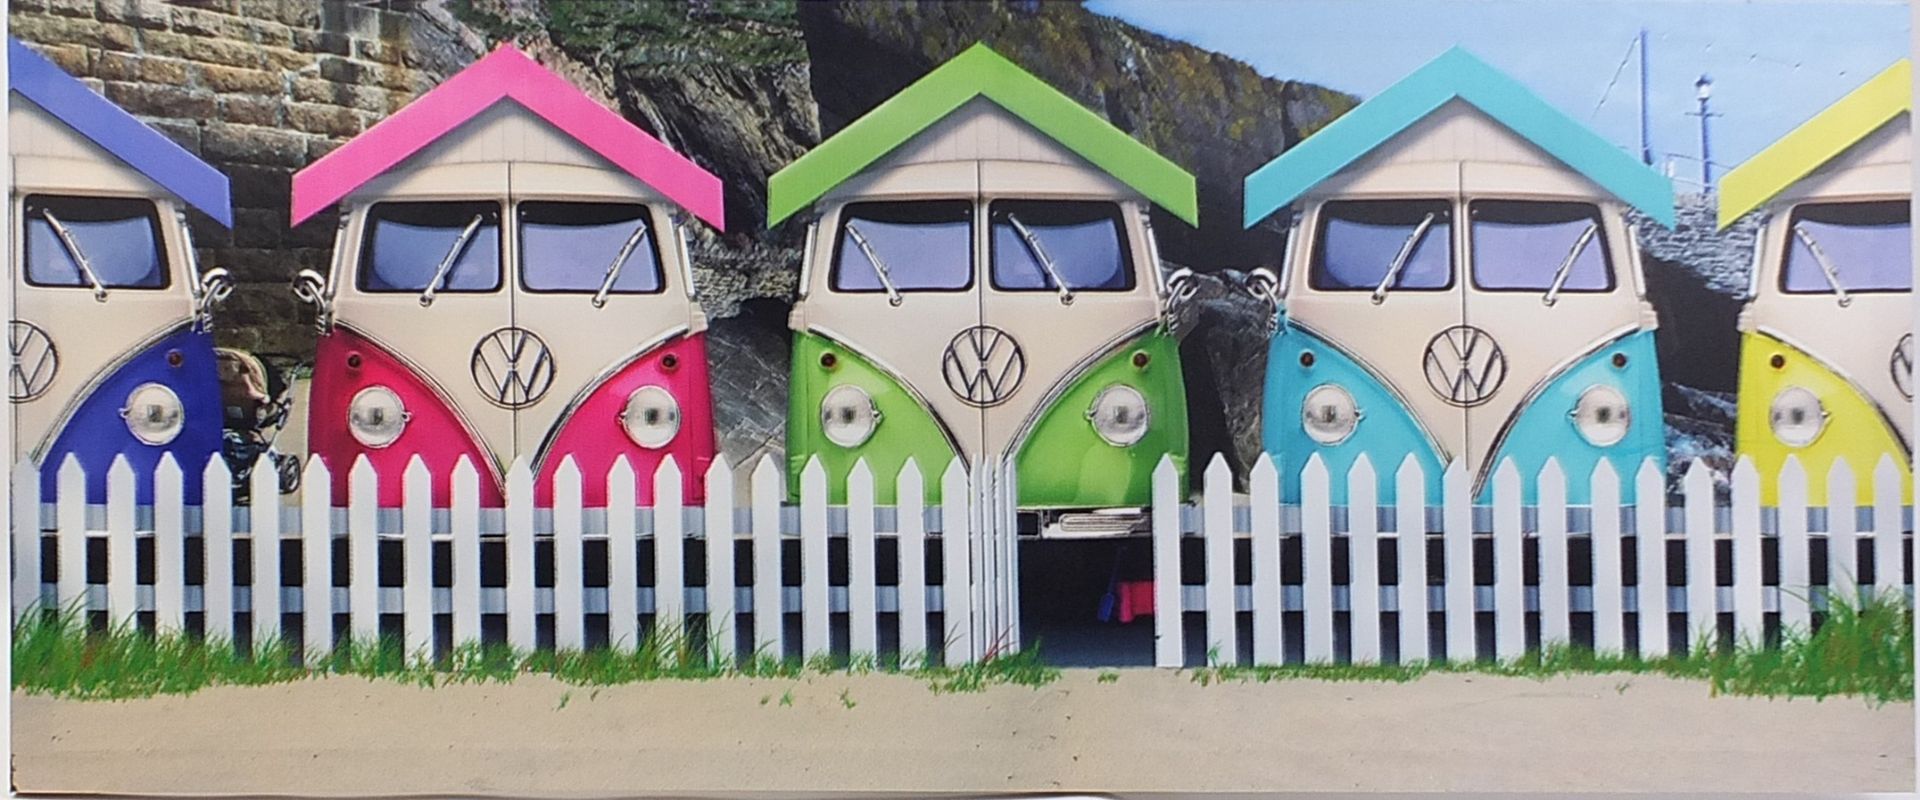 VW camper van beach huts, large retro print onto canvas, 122cm x 50cm